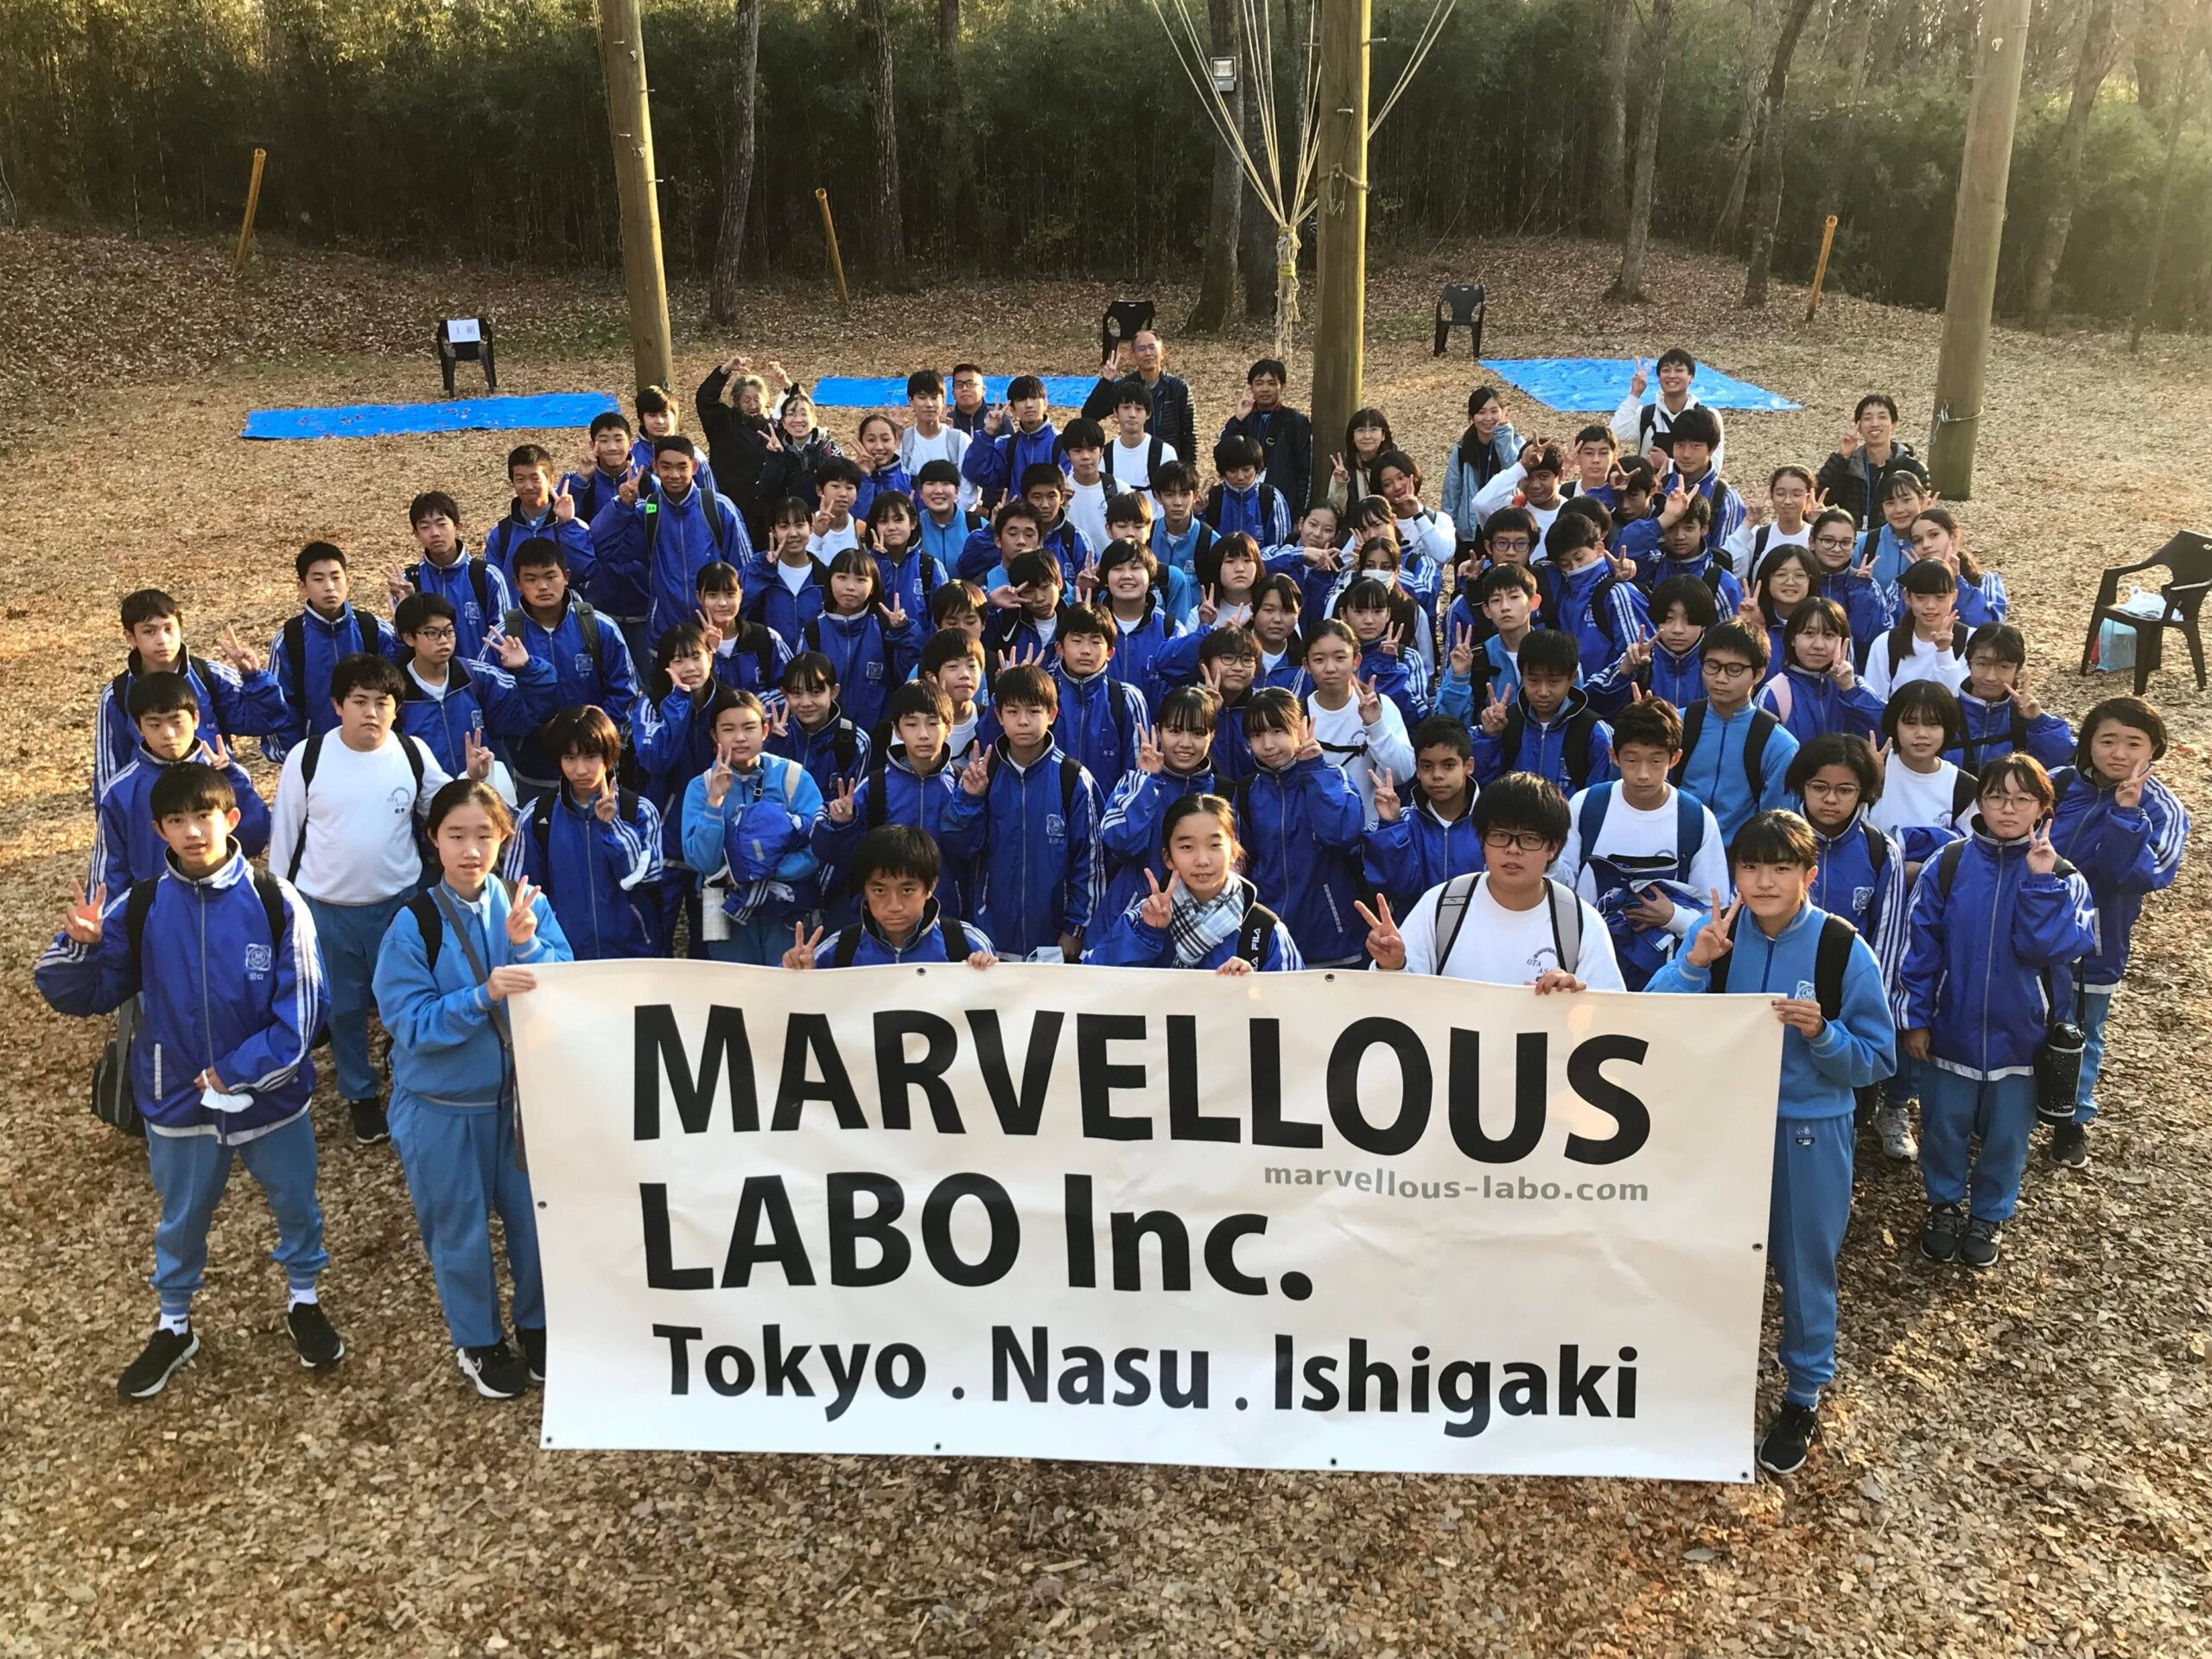 「MARVELLOUS LABO」の大きな旗を持って整列する参加者たち（太田市立旭中学校）